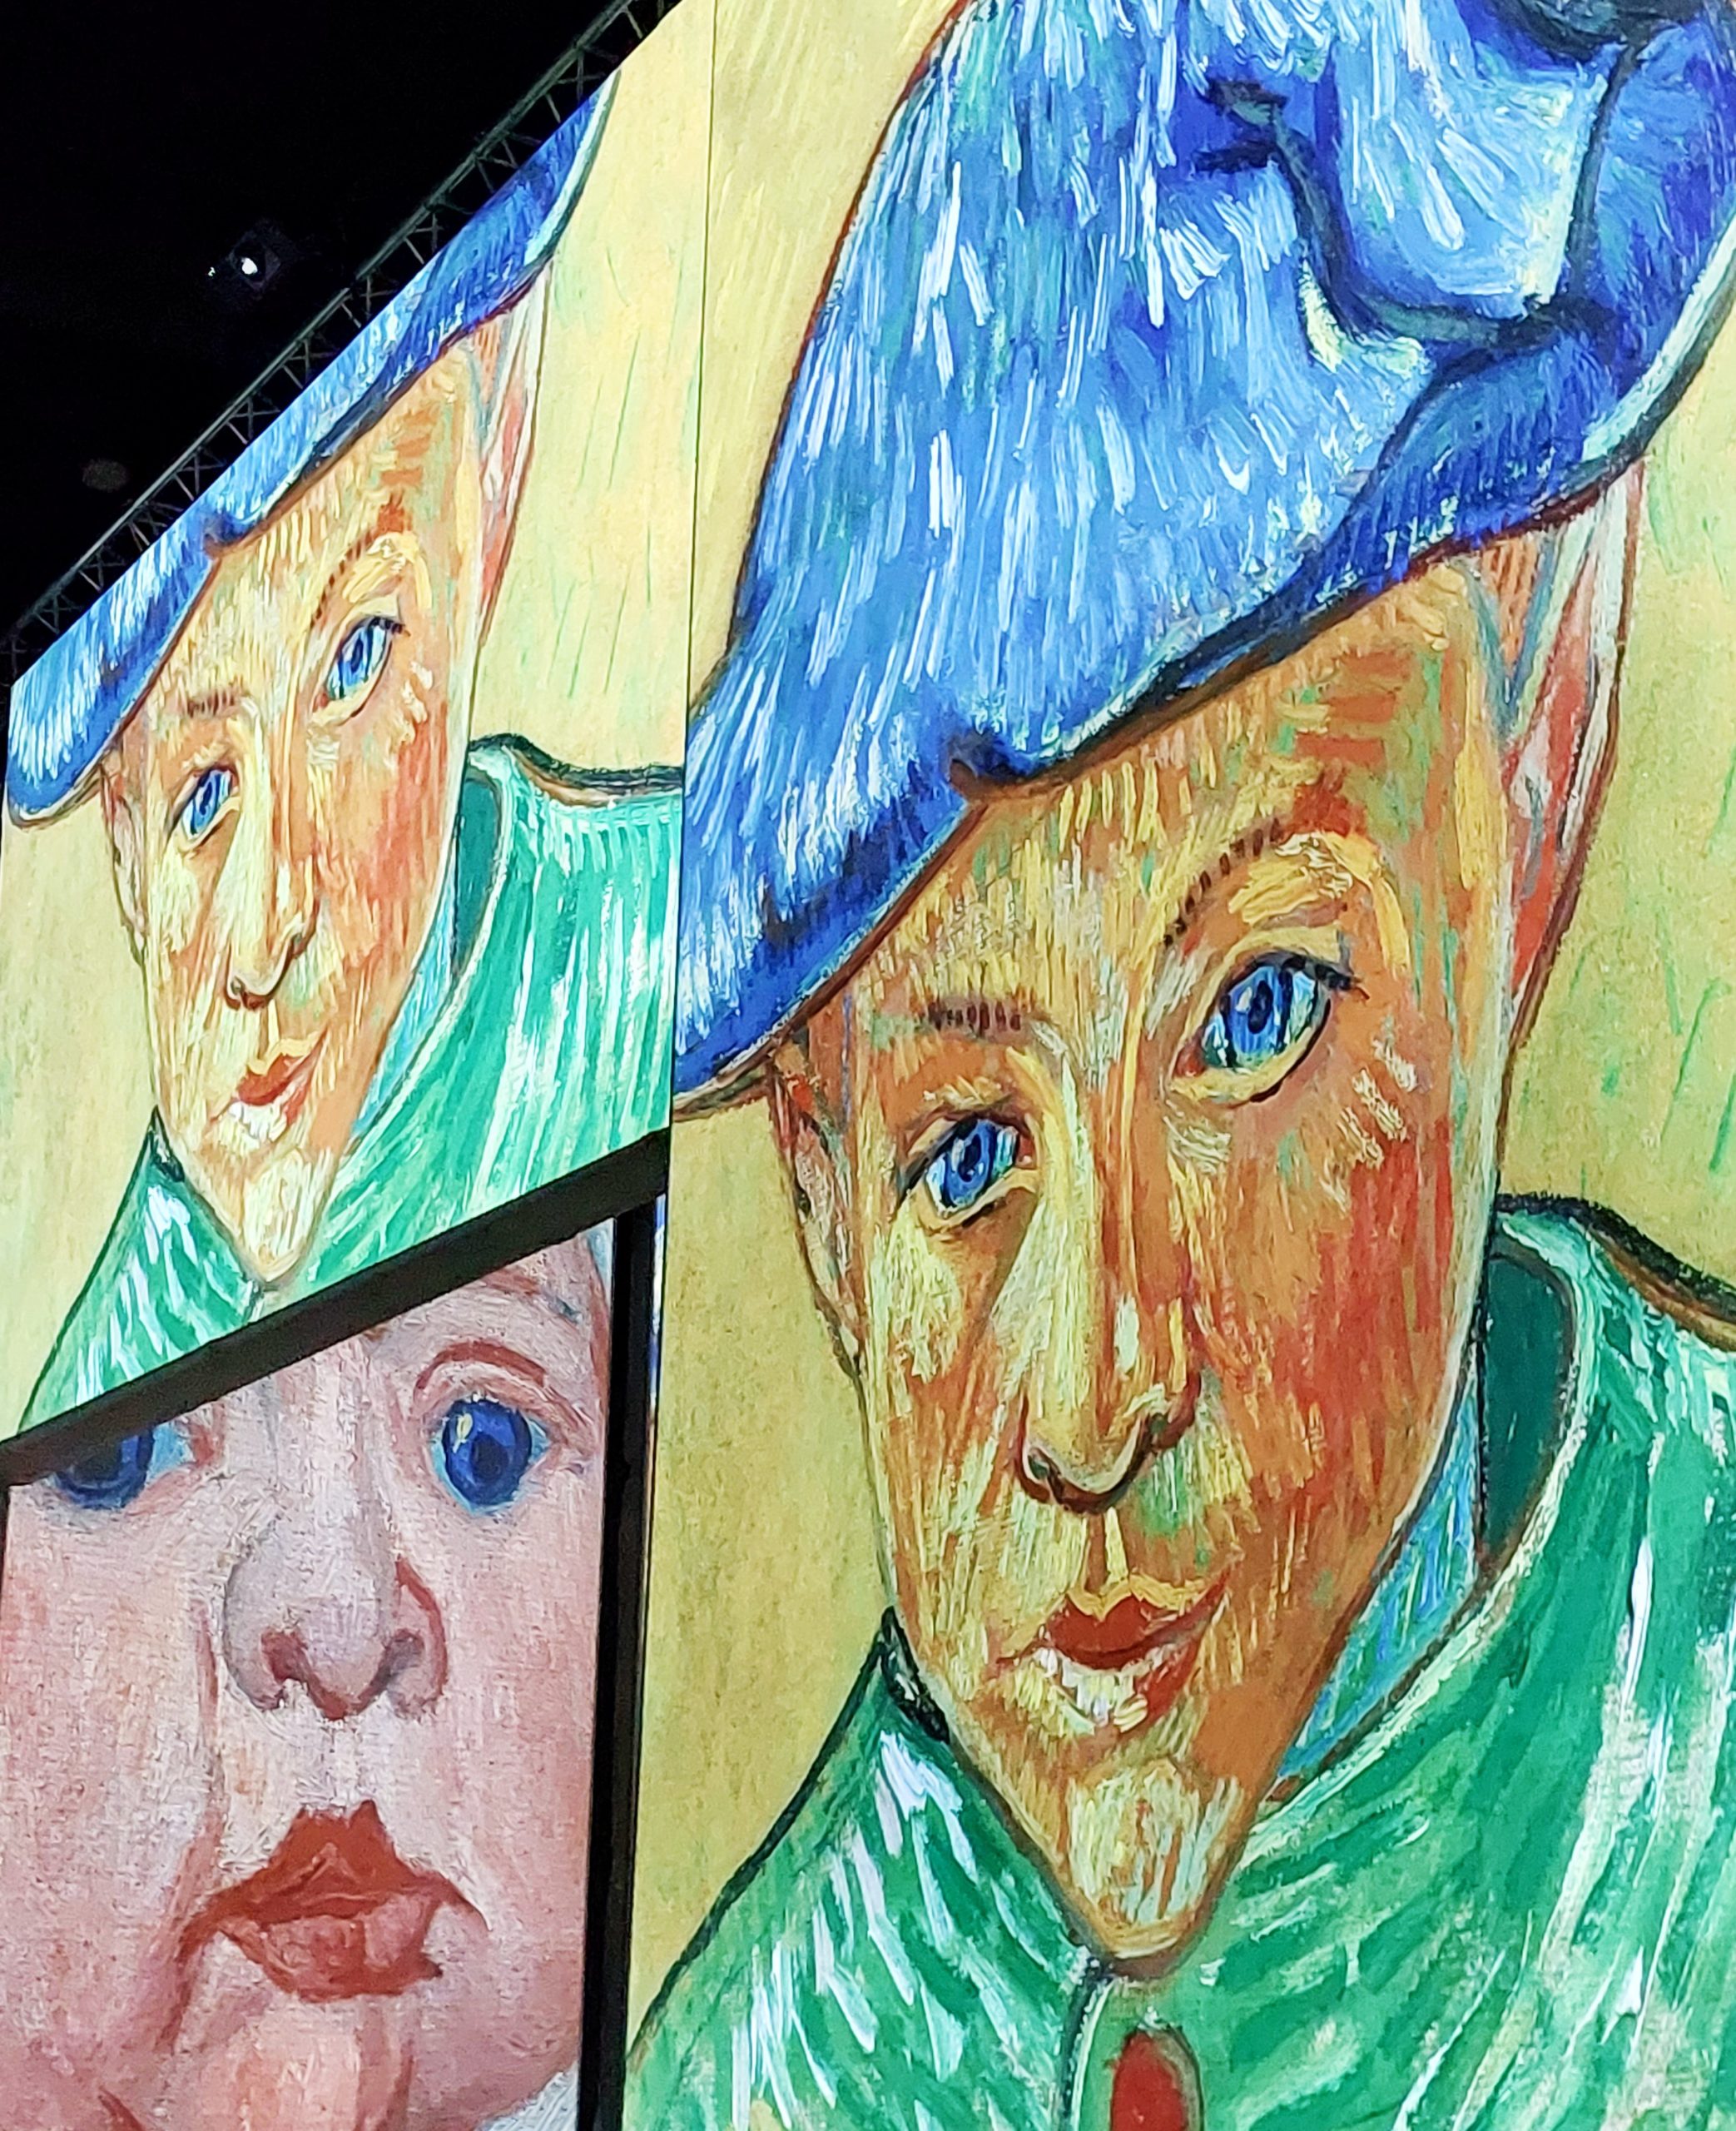 <img src="Vanjpg" alt="Van Gogh portrait of a boy"/> 